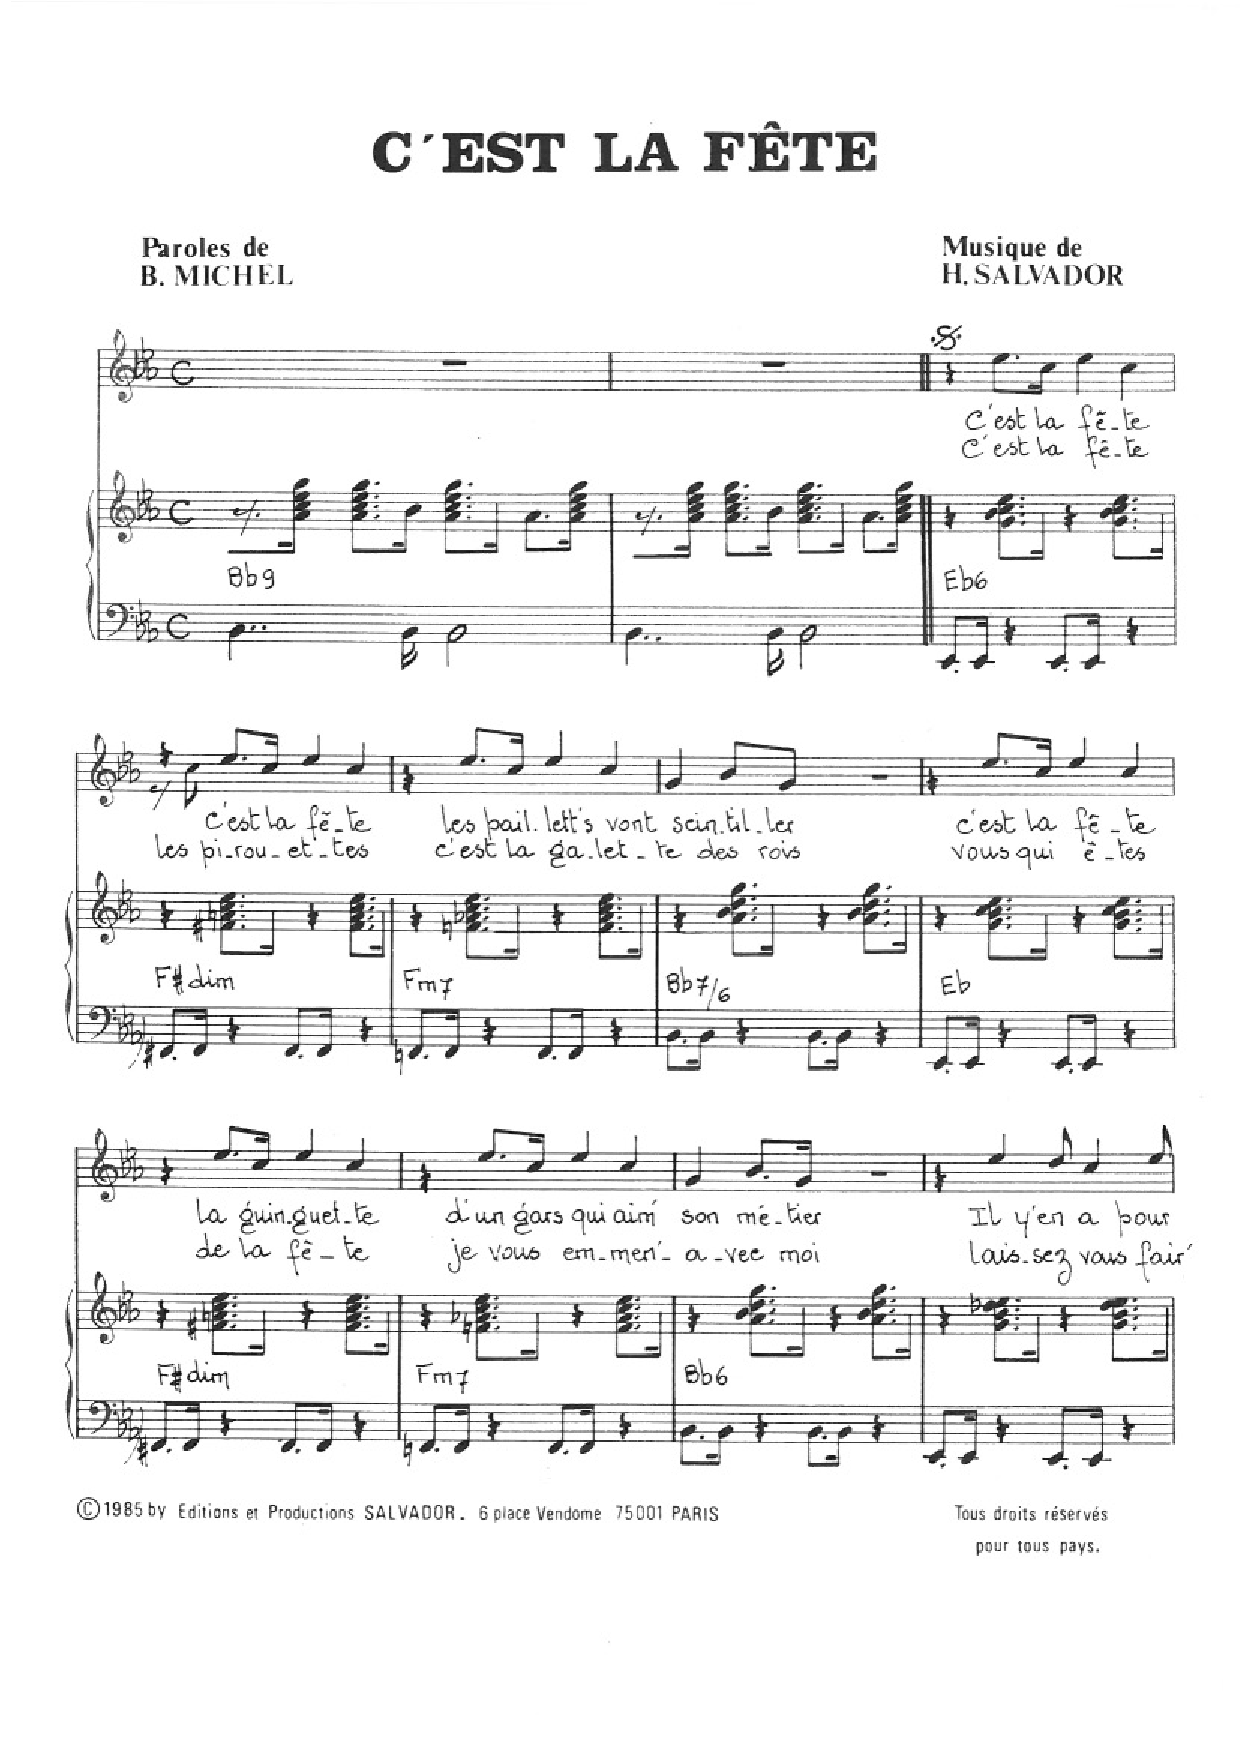 Henri Salvador C'est La Fete Sheet Music Notes & Chords for Piano & Vocal - Download or Print PDF